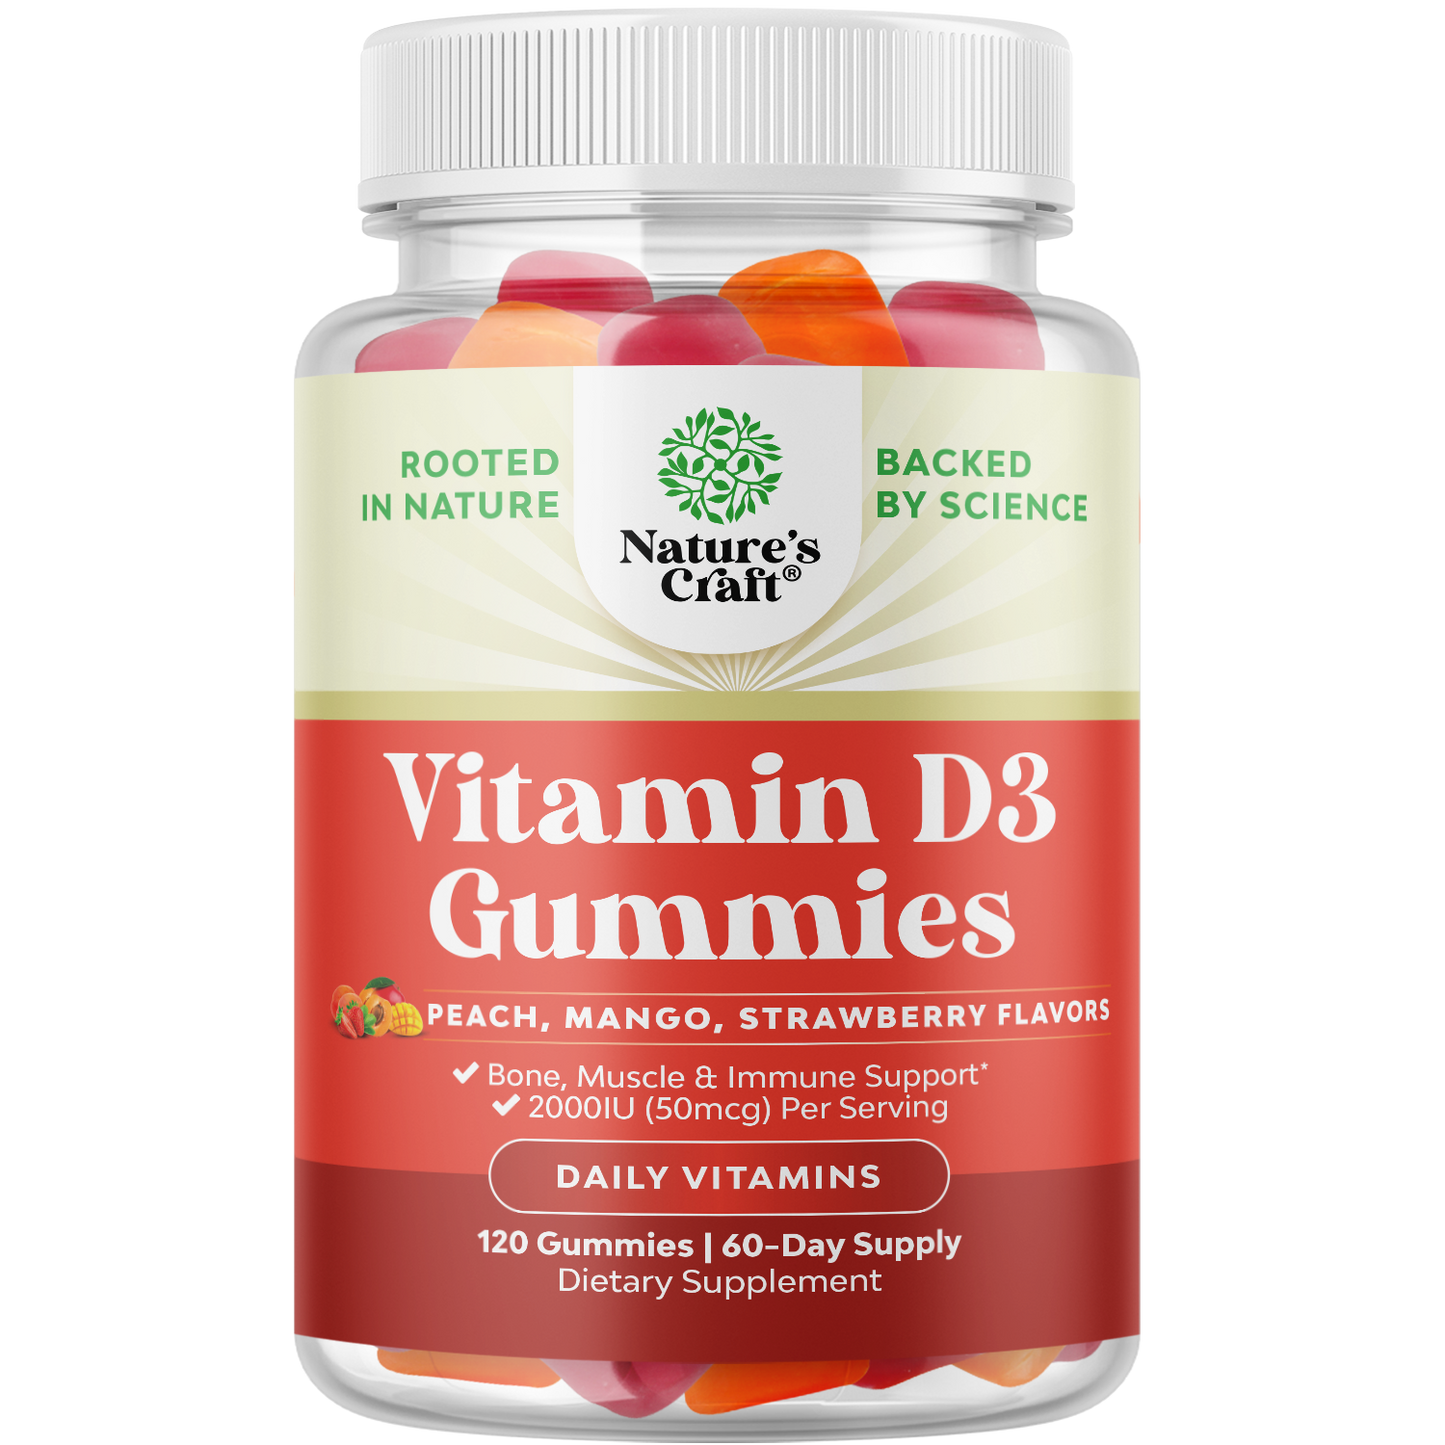 Vitamin D3 Gummies 2000IU per serving - 120 Gummies